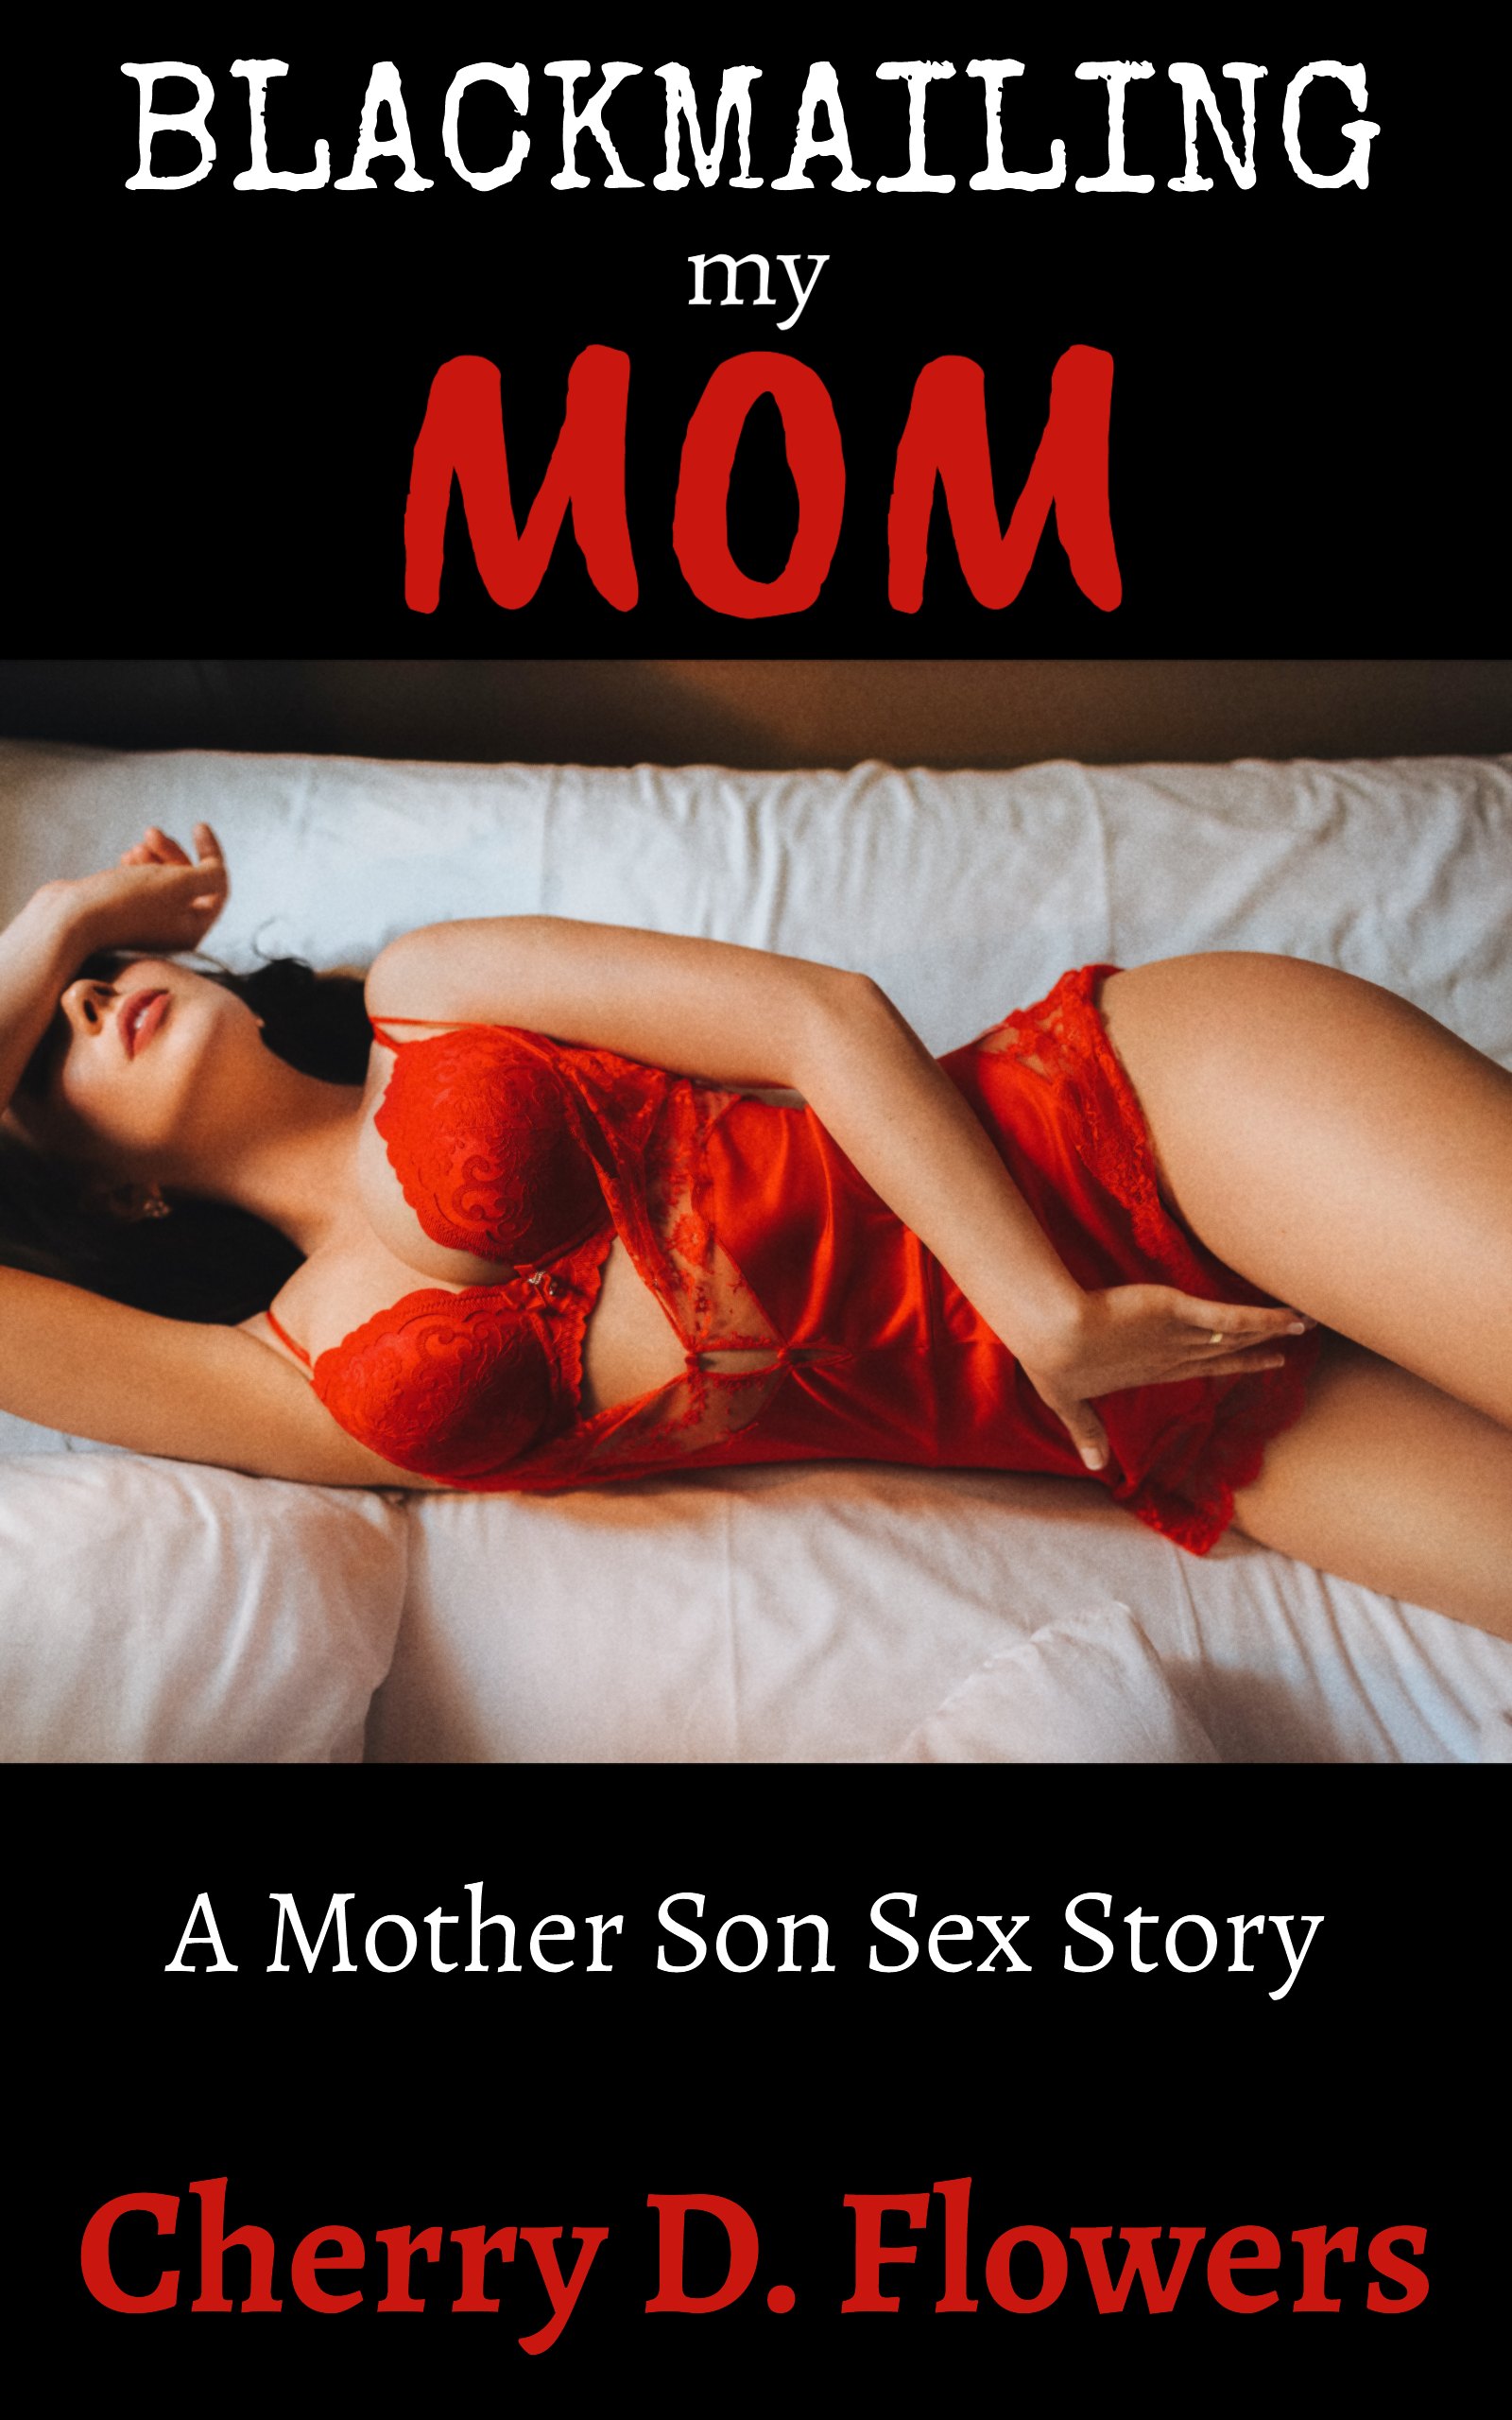 Mom son erotic story